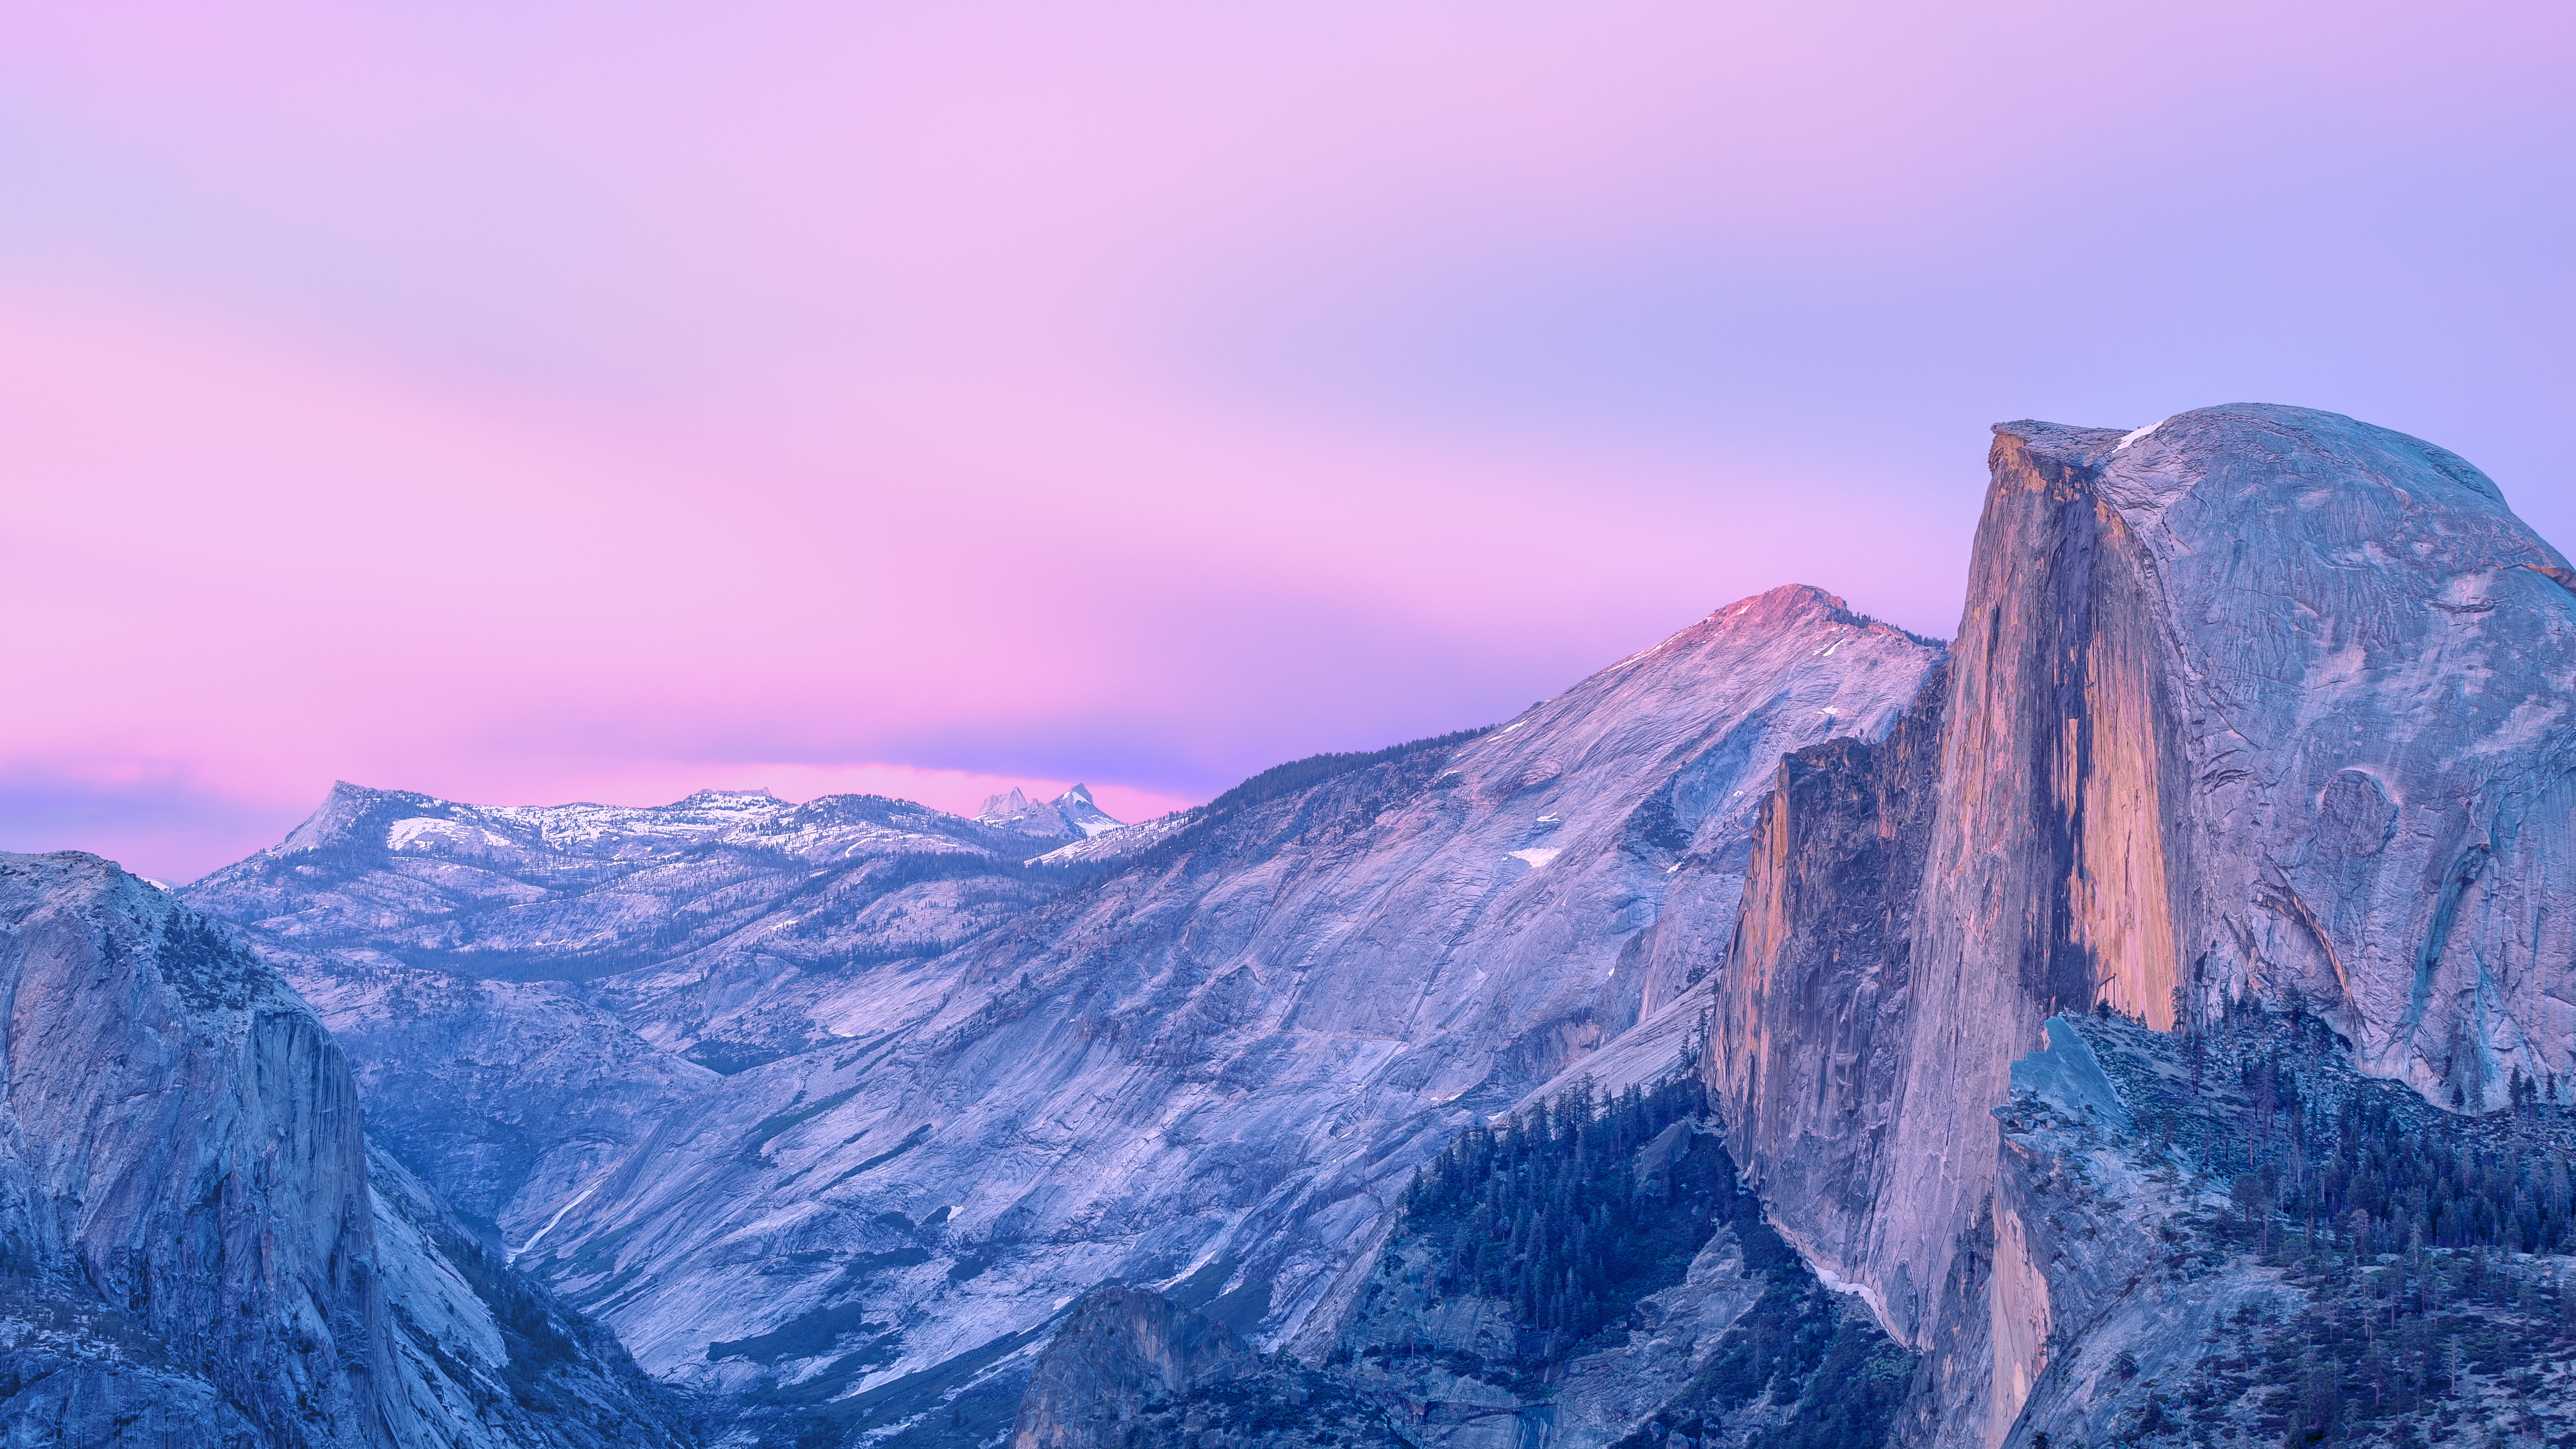 Wallpaper Mac Os, Yosemite National Park, Yosemite Valley, Half Dome, Glacier Point, Background Free Image